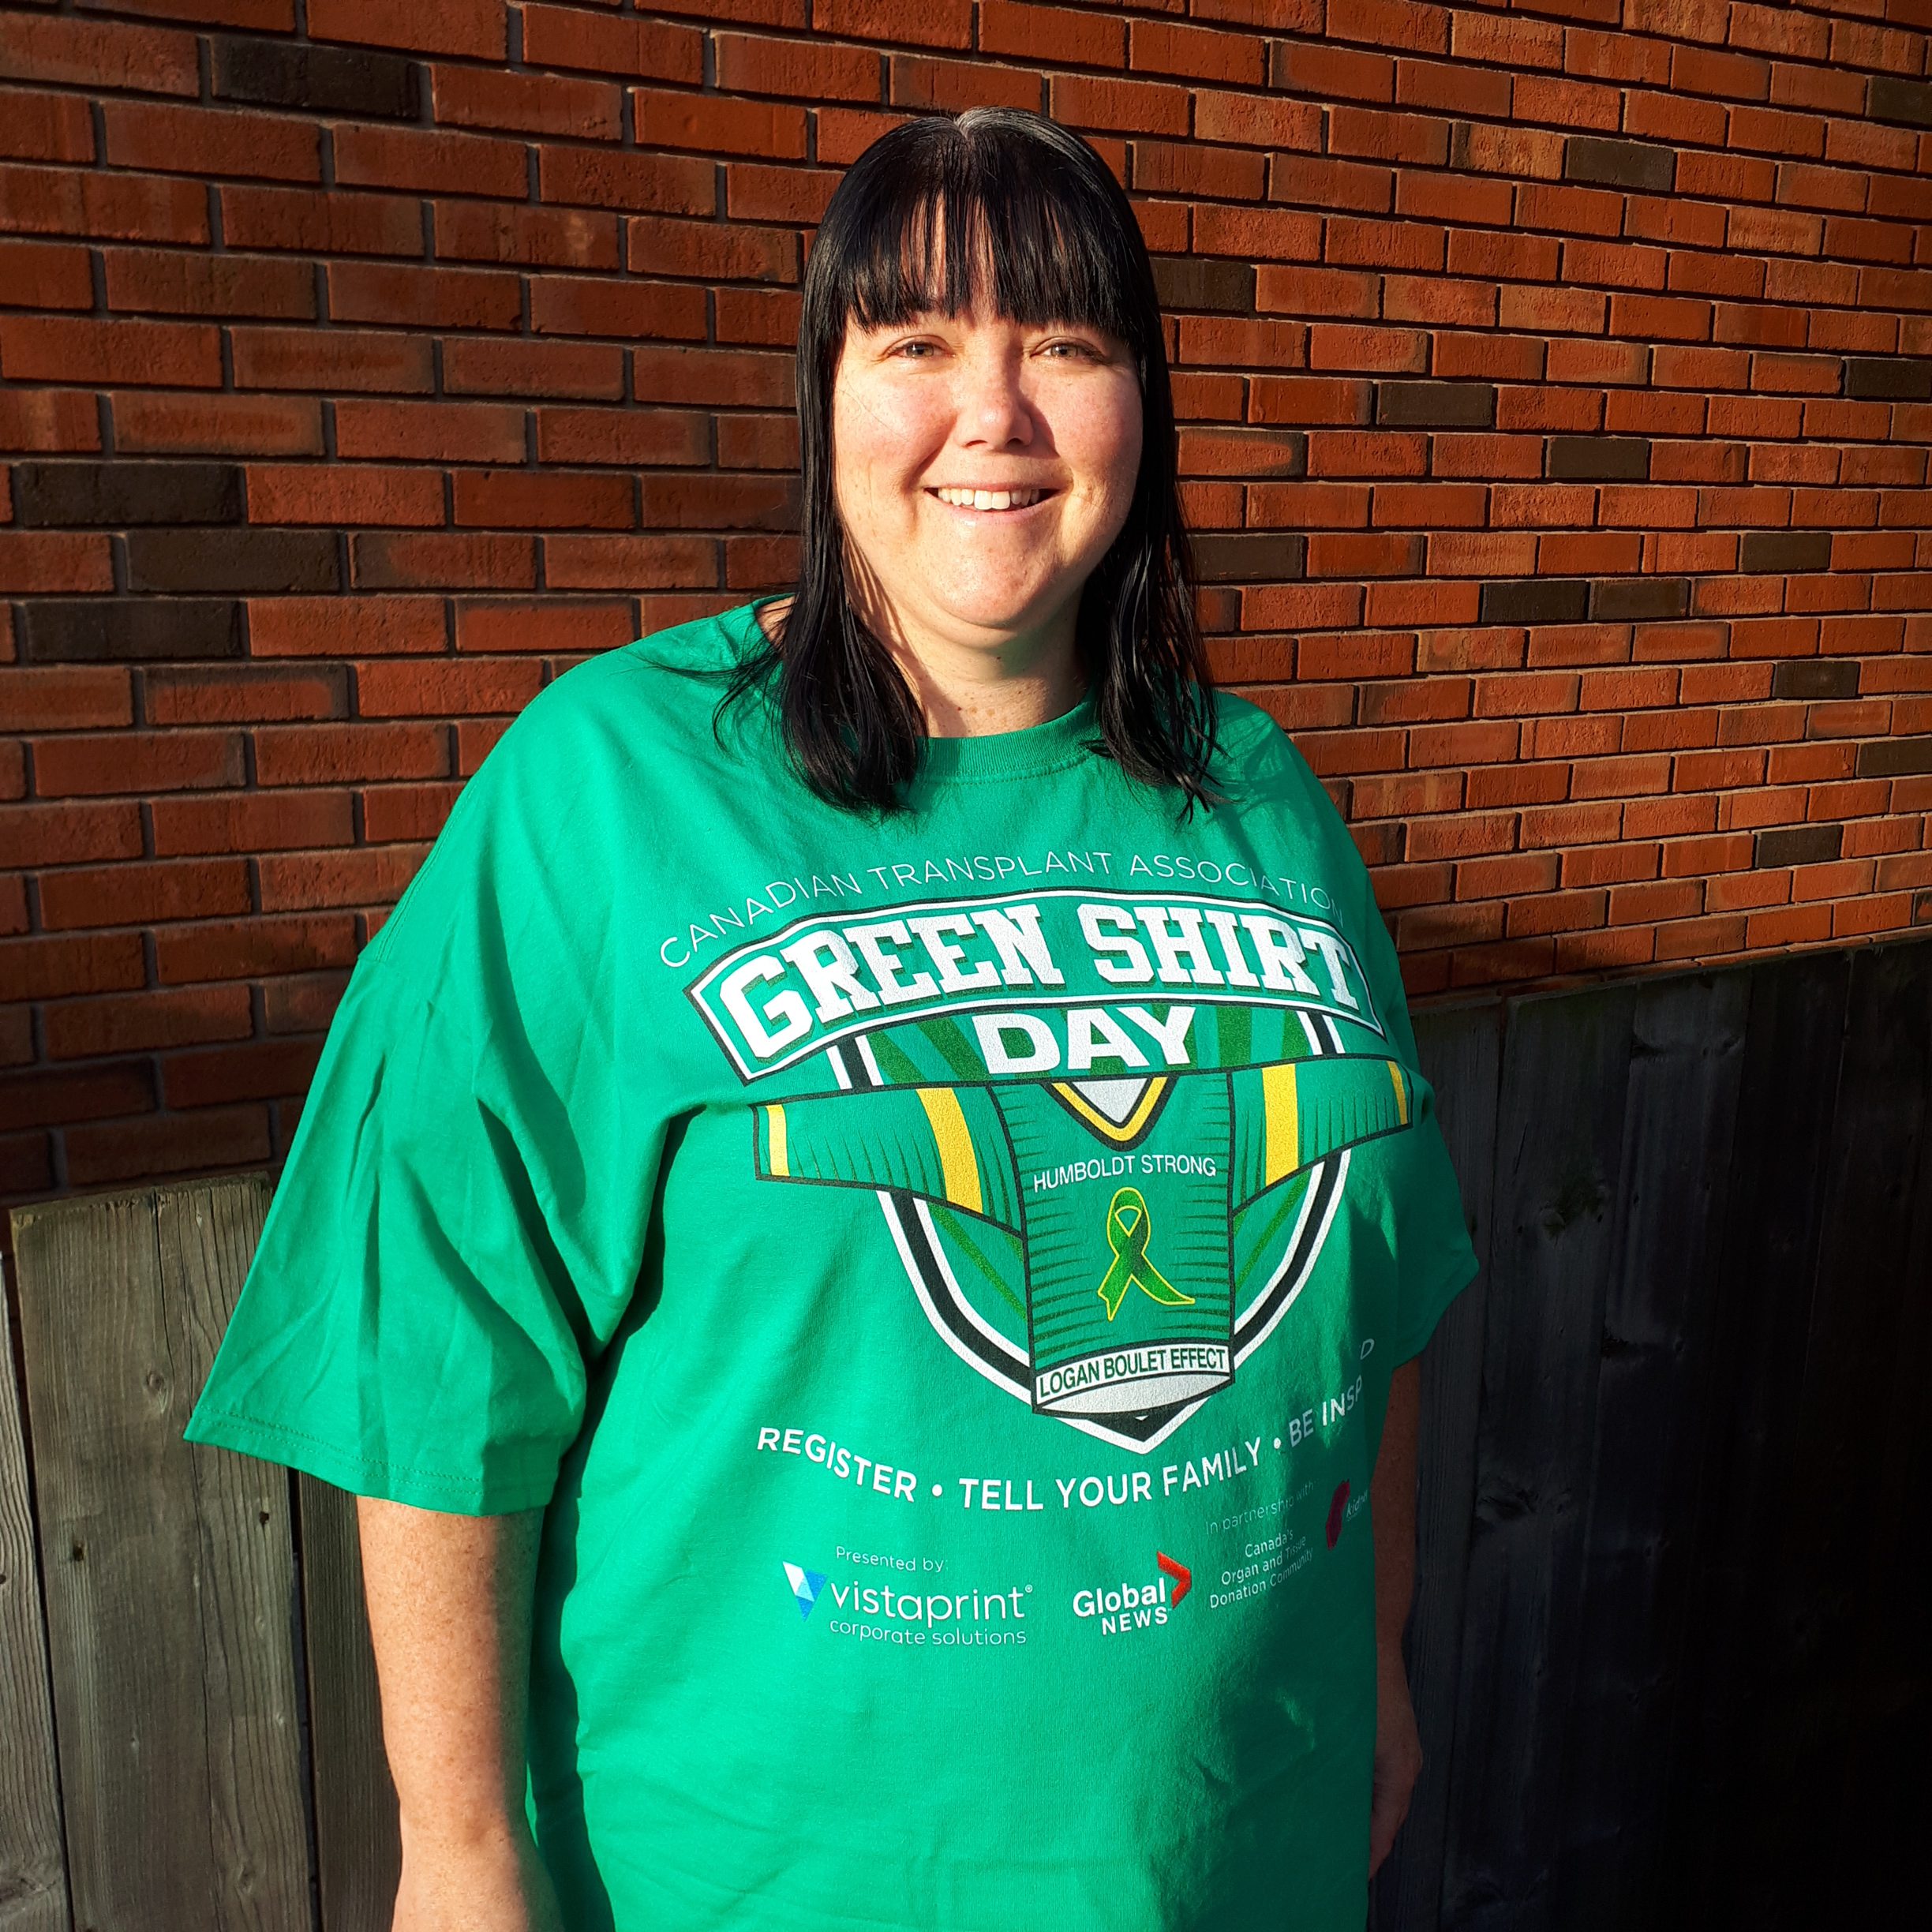 Humboldt Broncos: Logan Boulet and Green Shirt Day